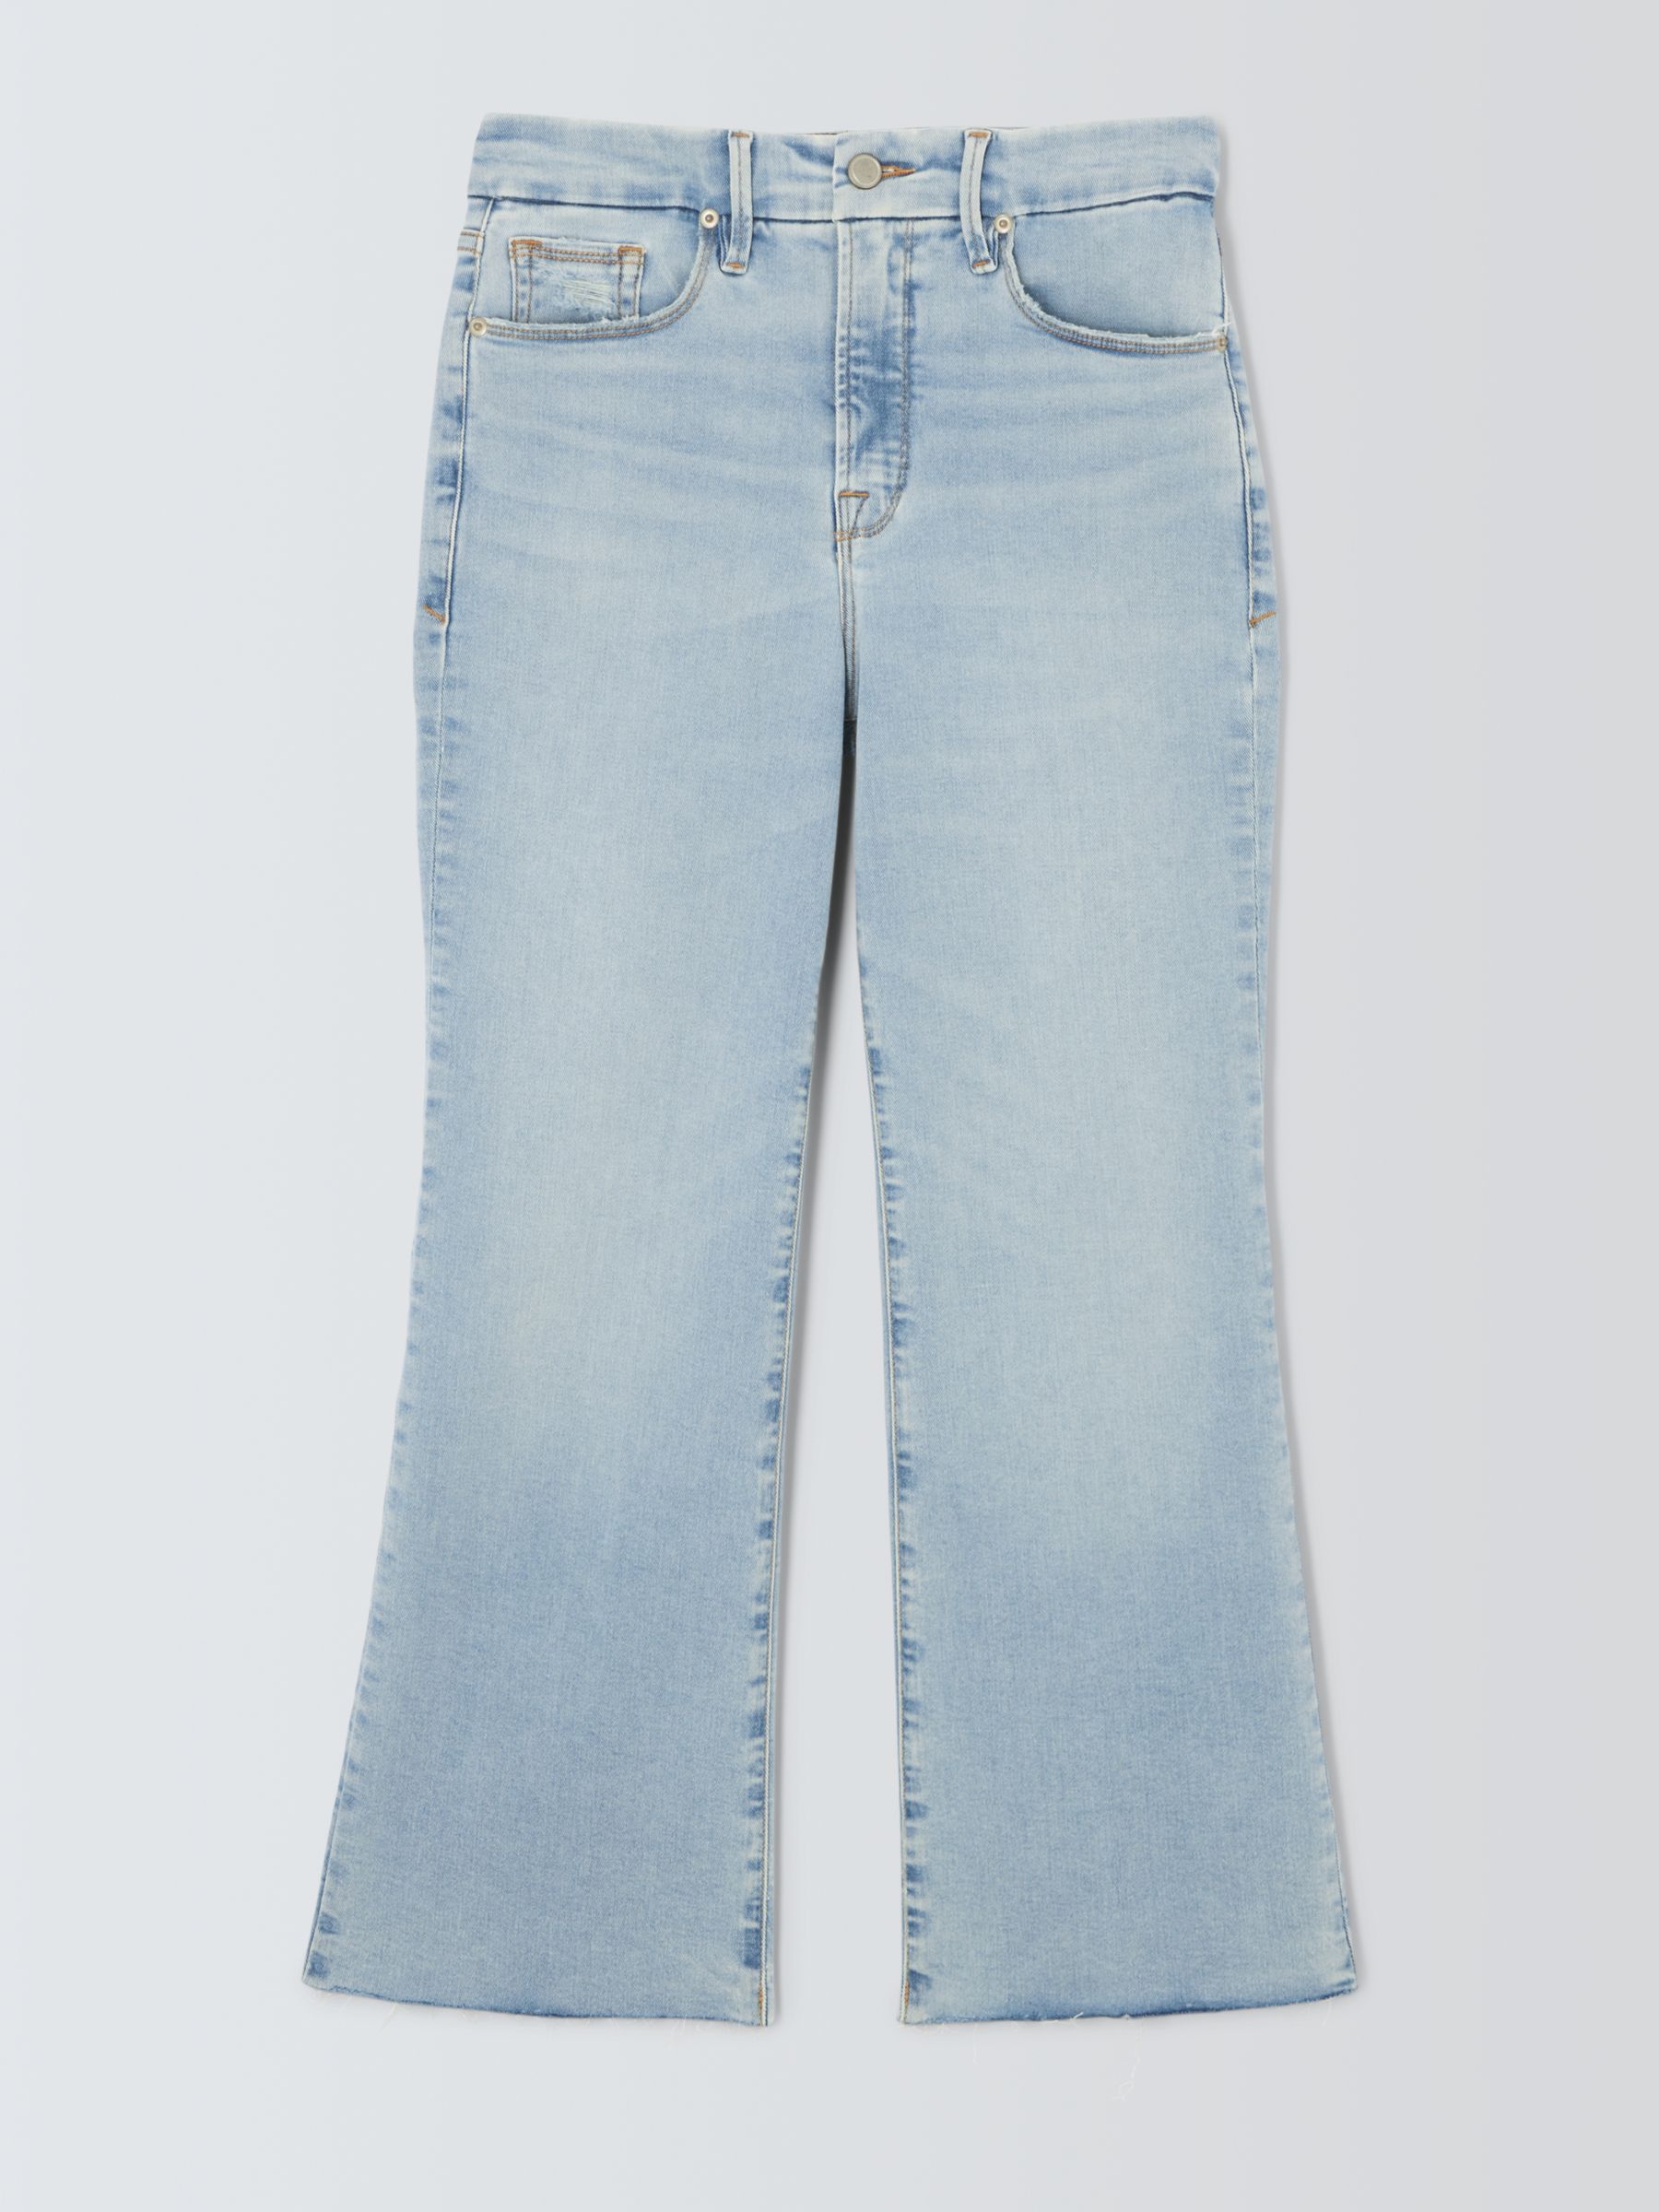 Good American Crop Mini Bootcut Jeans, Indigo 715, 32